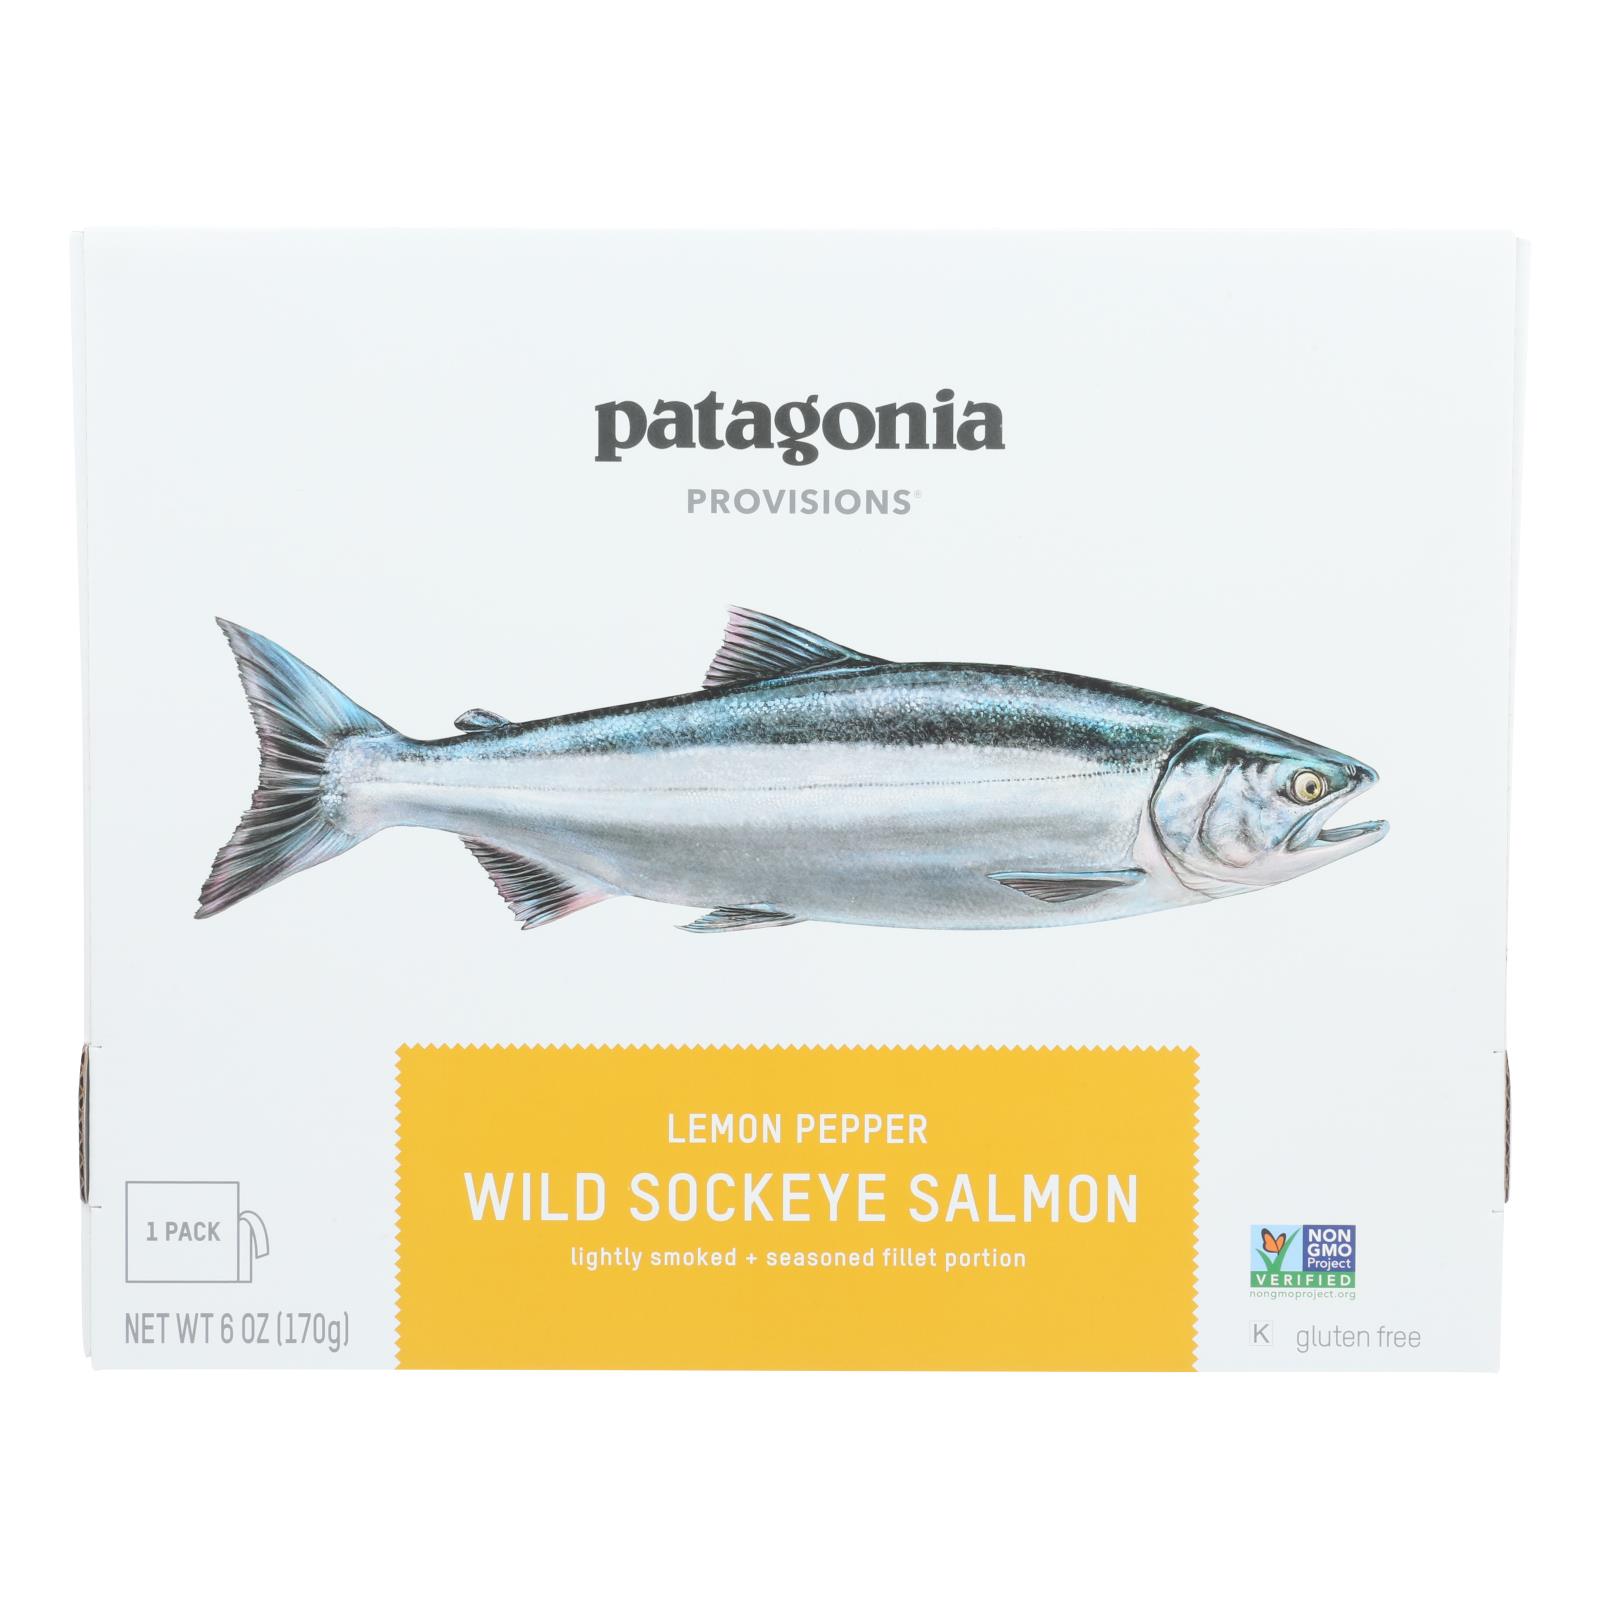 Patagonia - Salmon Wld Skeye Lemn Pepper - Case of 12 - 6 OZ